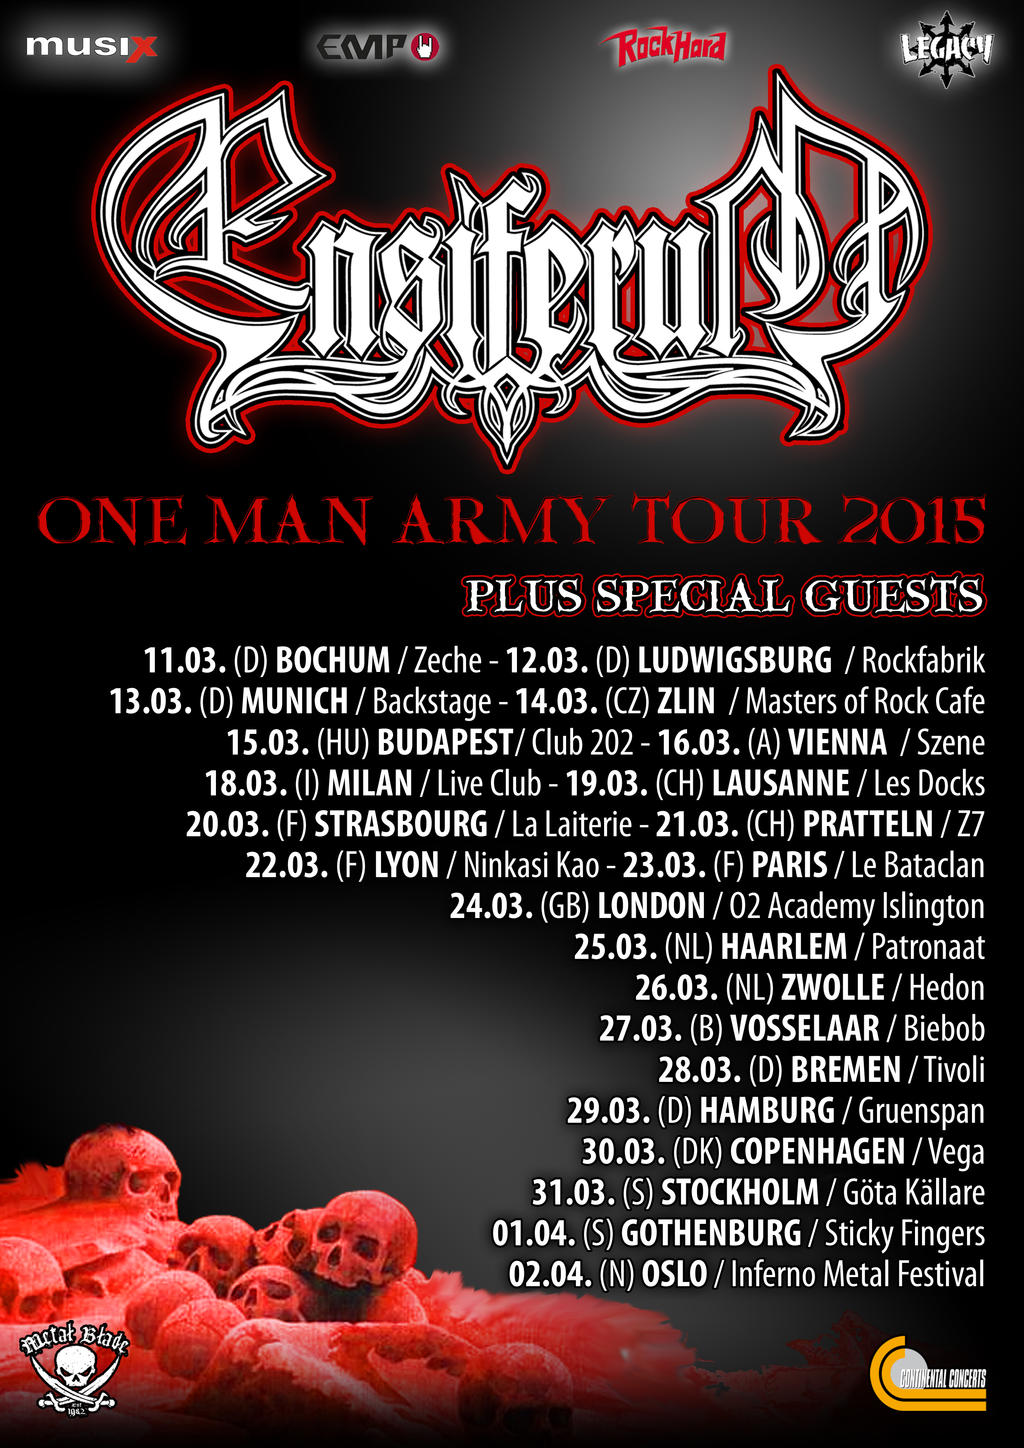 Ensiferum – on tour in March